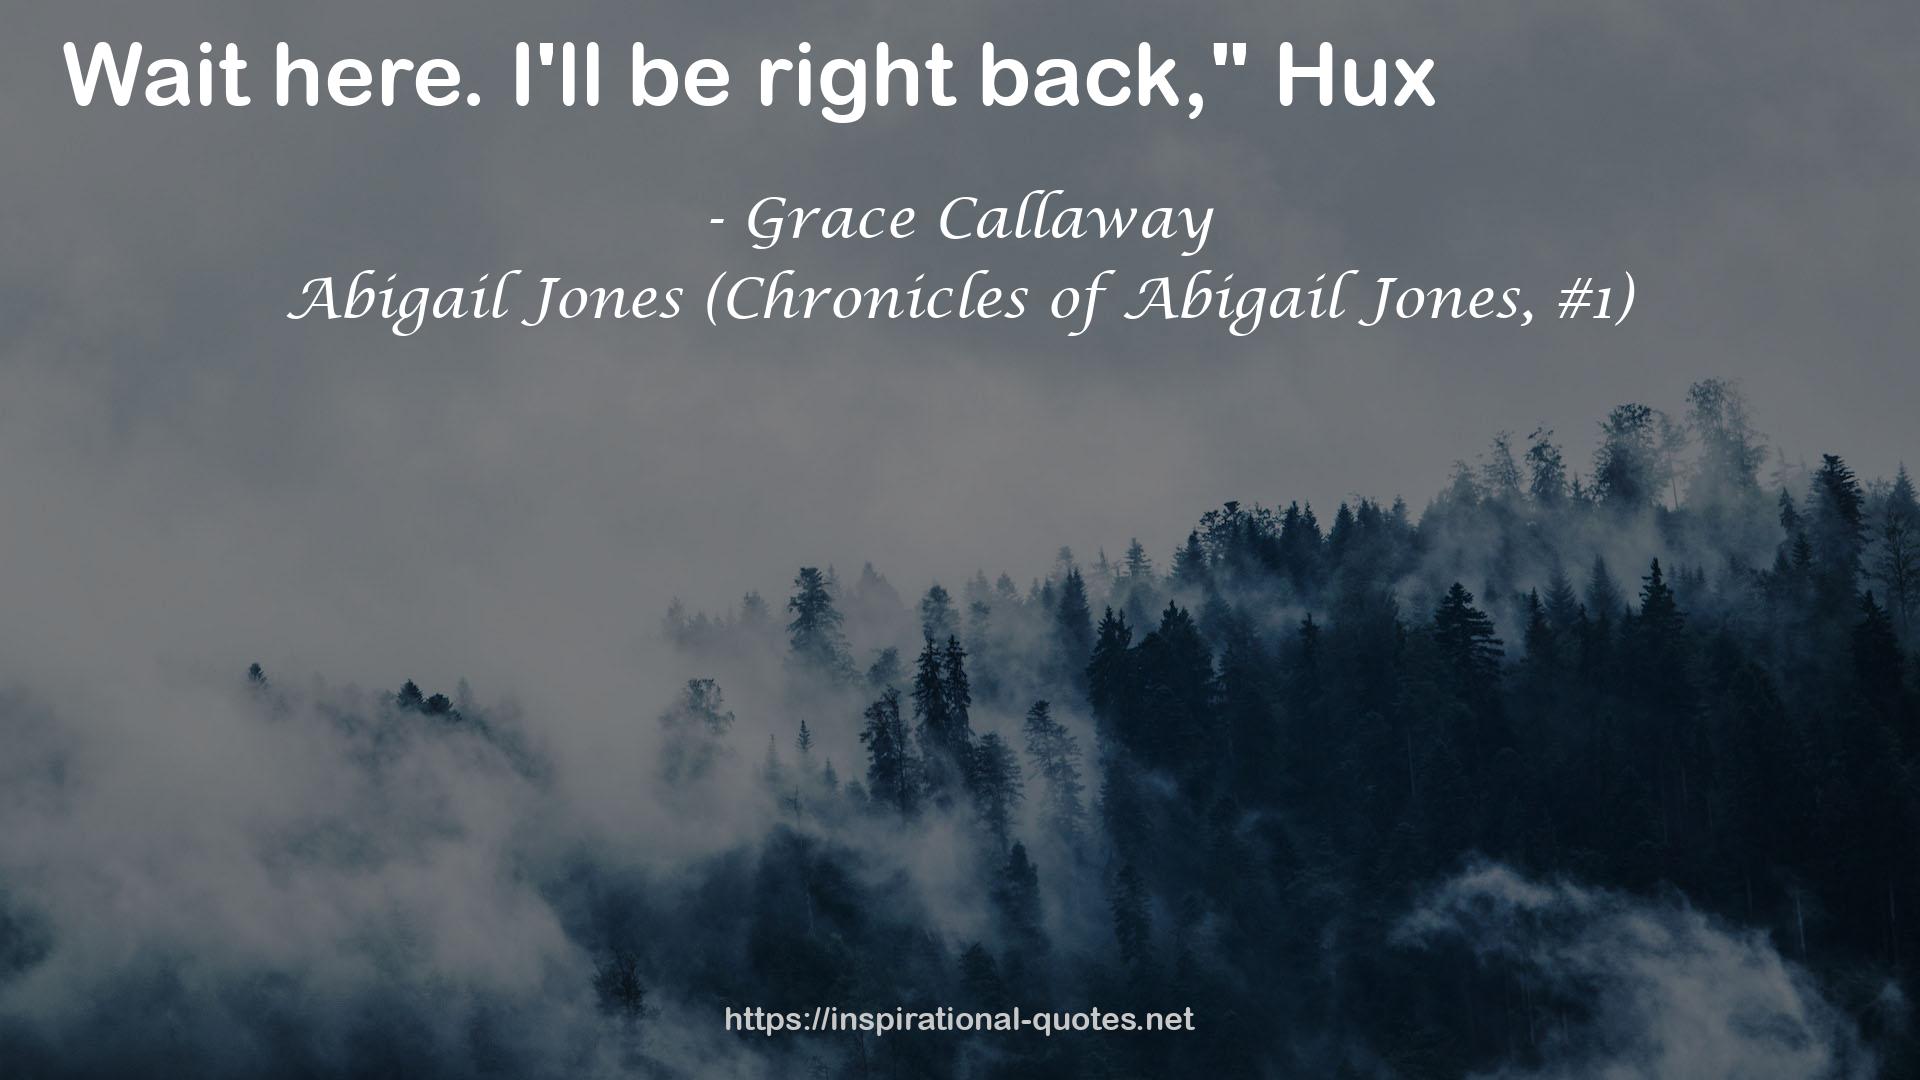 Abigail Jones (Chronicles of Abigail Jones, #1) QUOTES